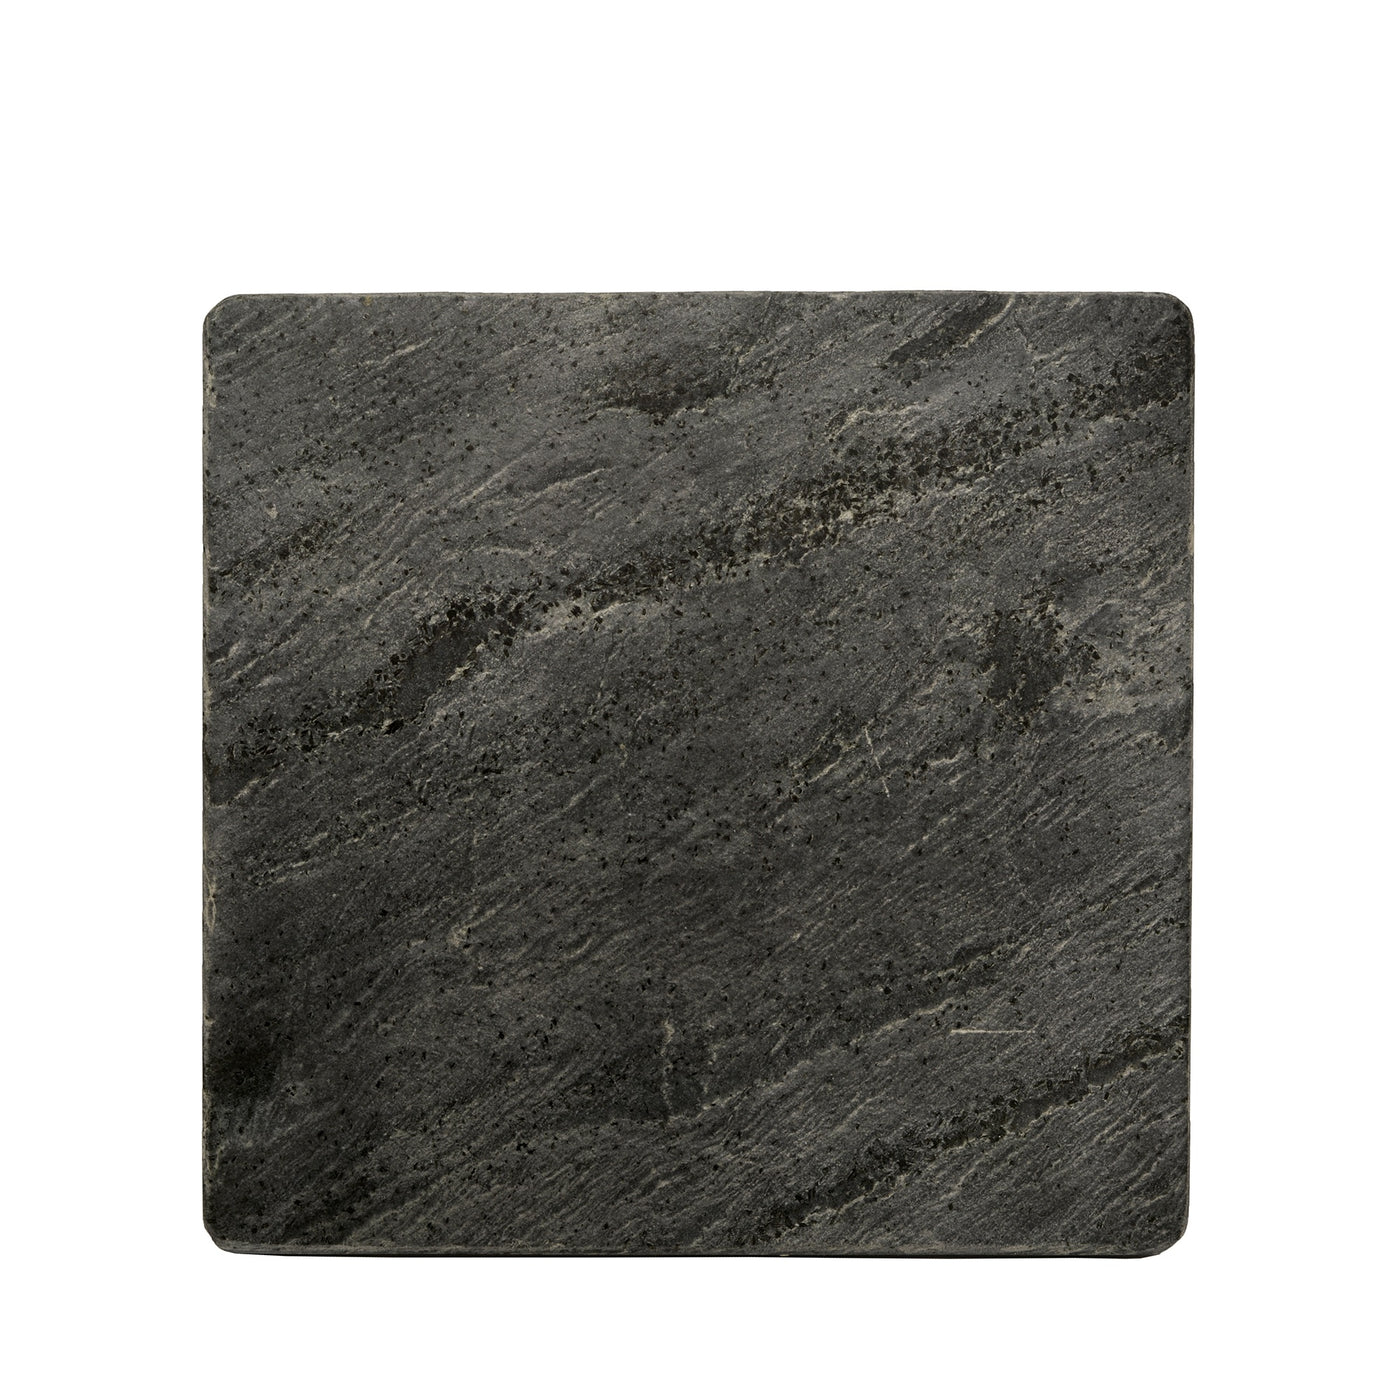 Tade Pays du Levant Square Grey Slate Plate 25x25cm